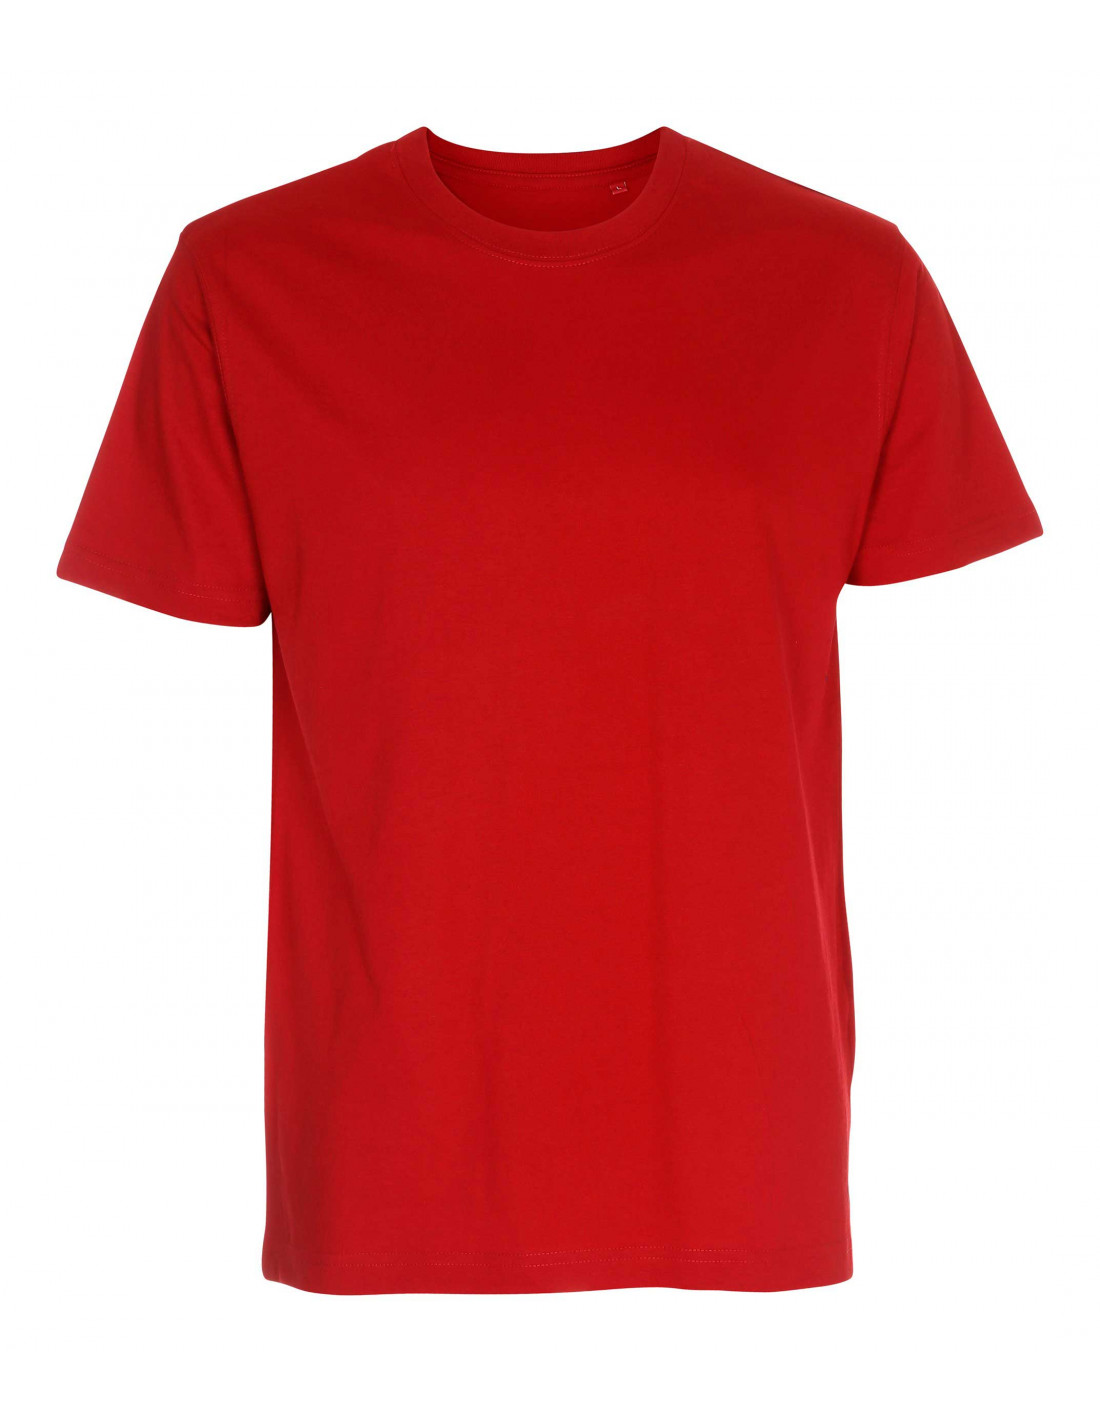 Premium T-shirt Red - TBY004DanishRed